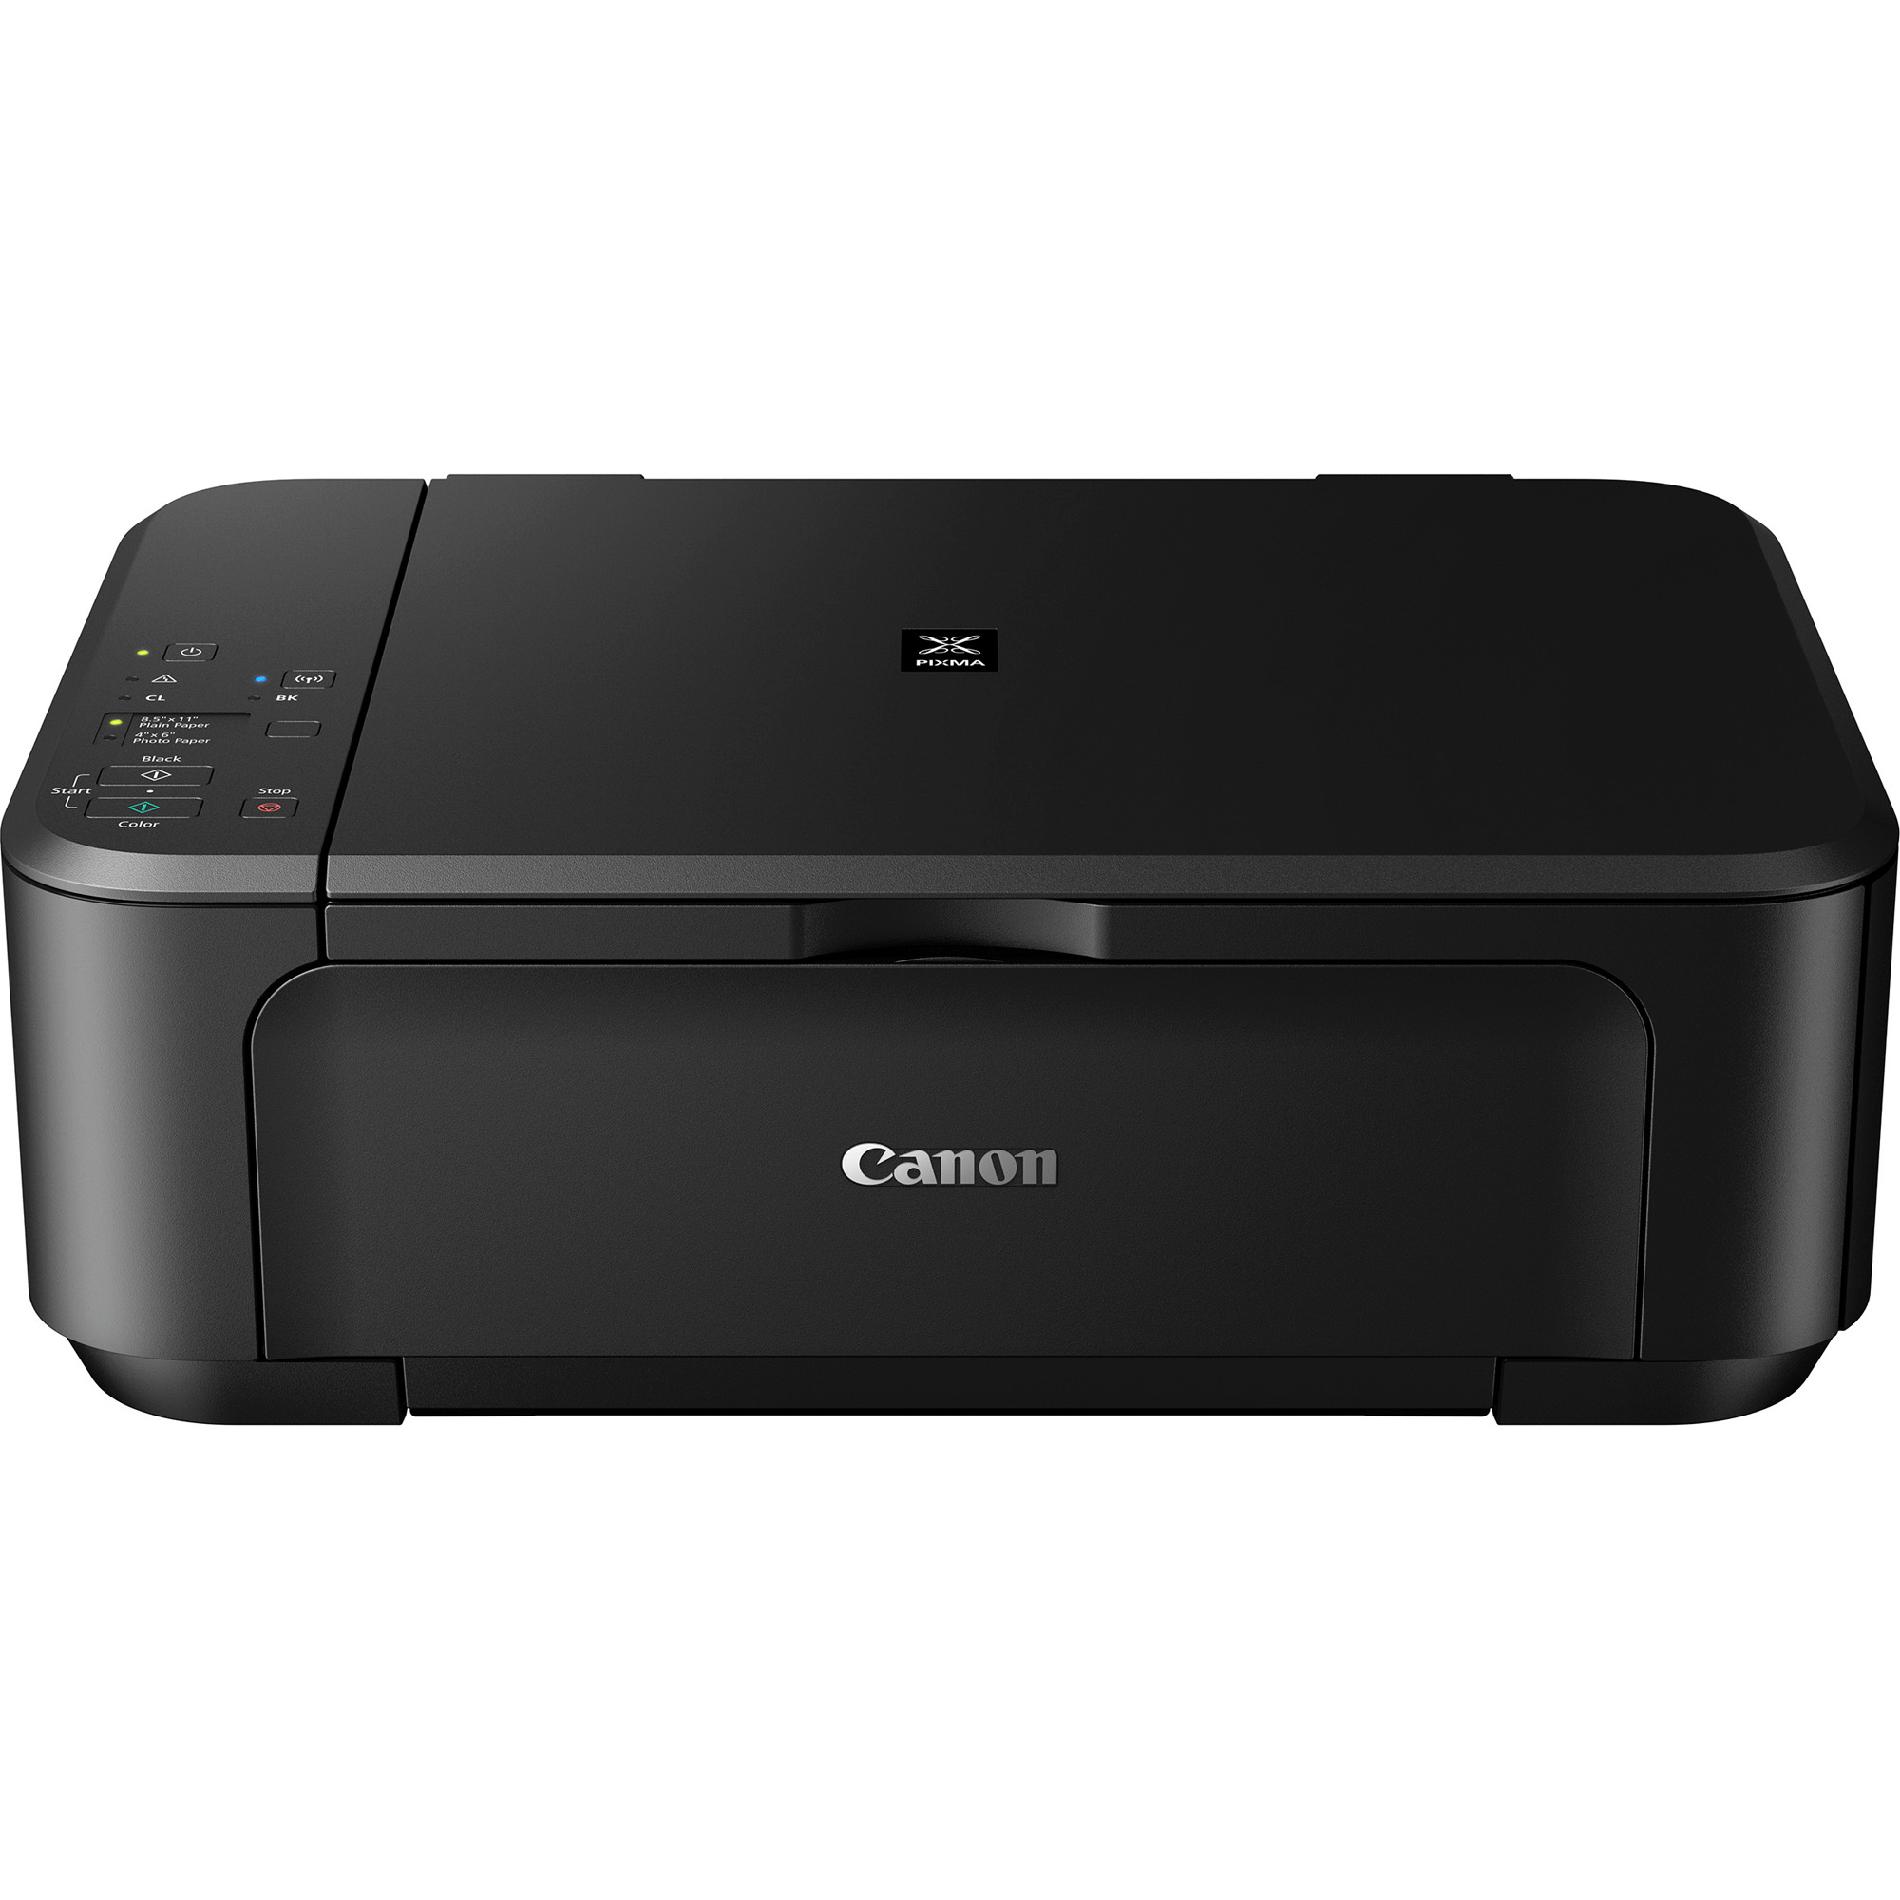 Canon Pixma Wireless Inkjet Photo All-in-One Printer MG3520